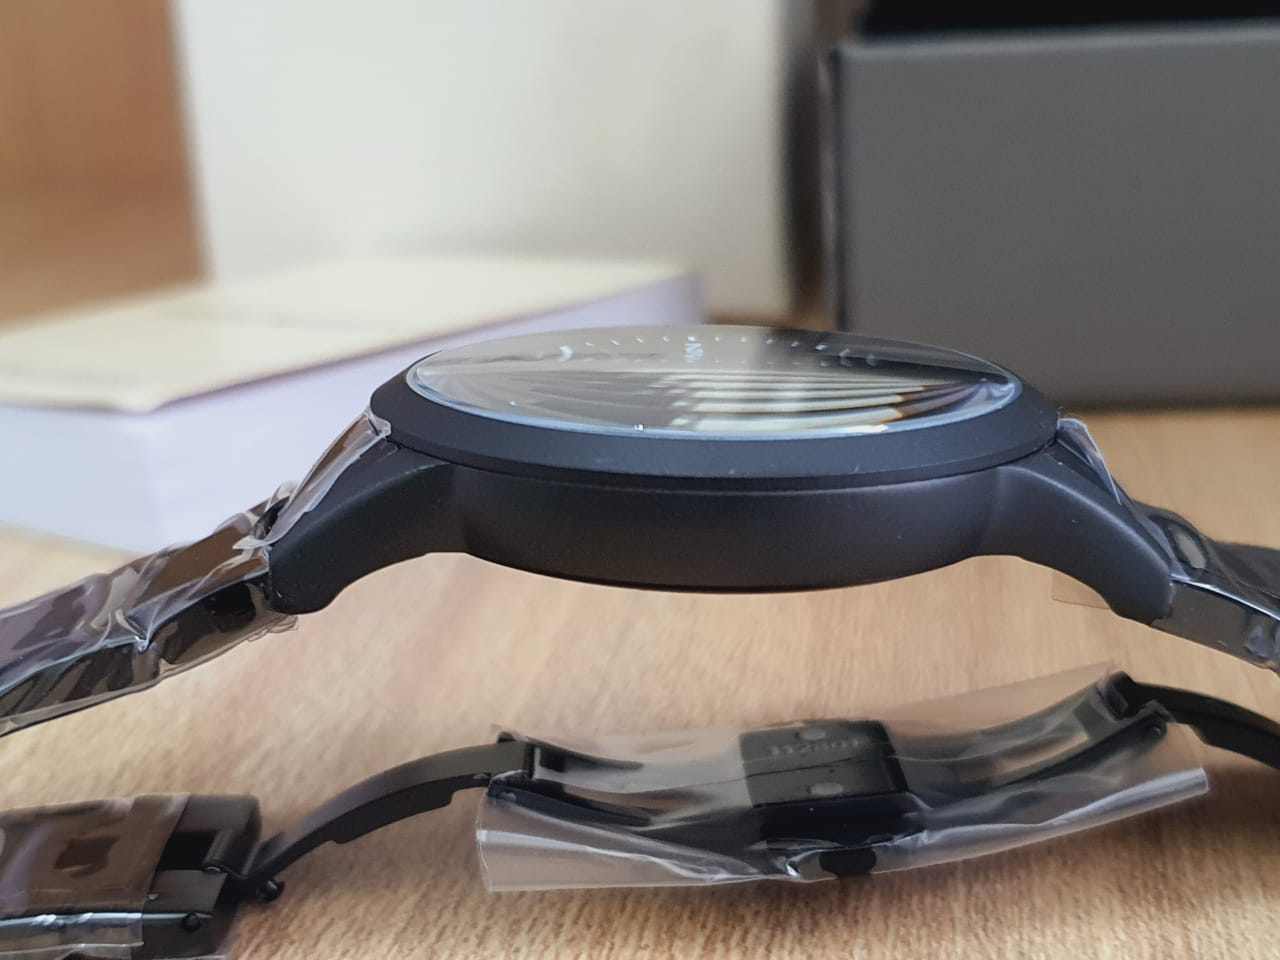 Emporio Armani Men’s Chronograph Quartz Analog Stainless Steel Black Dial 43mm Watch AR11275